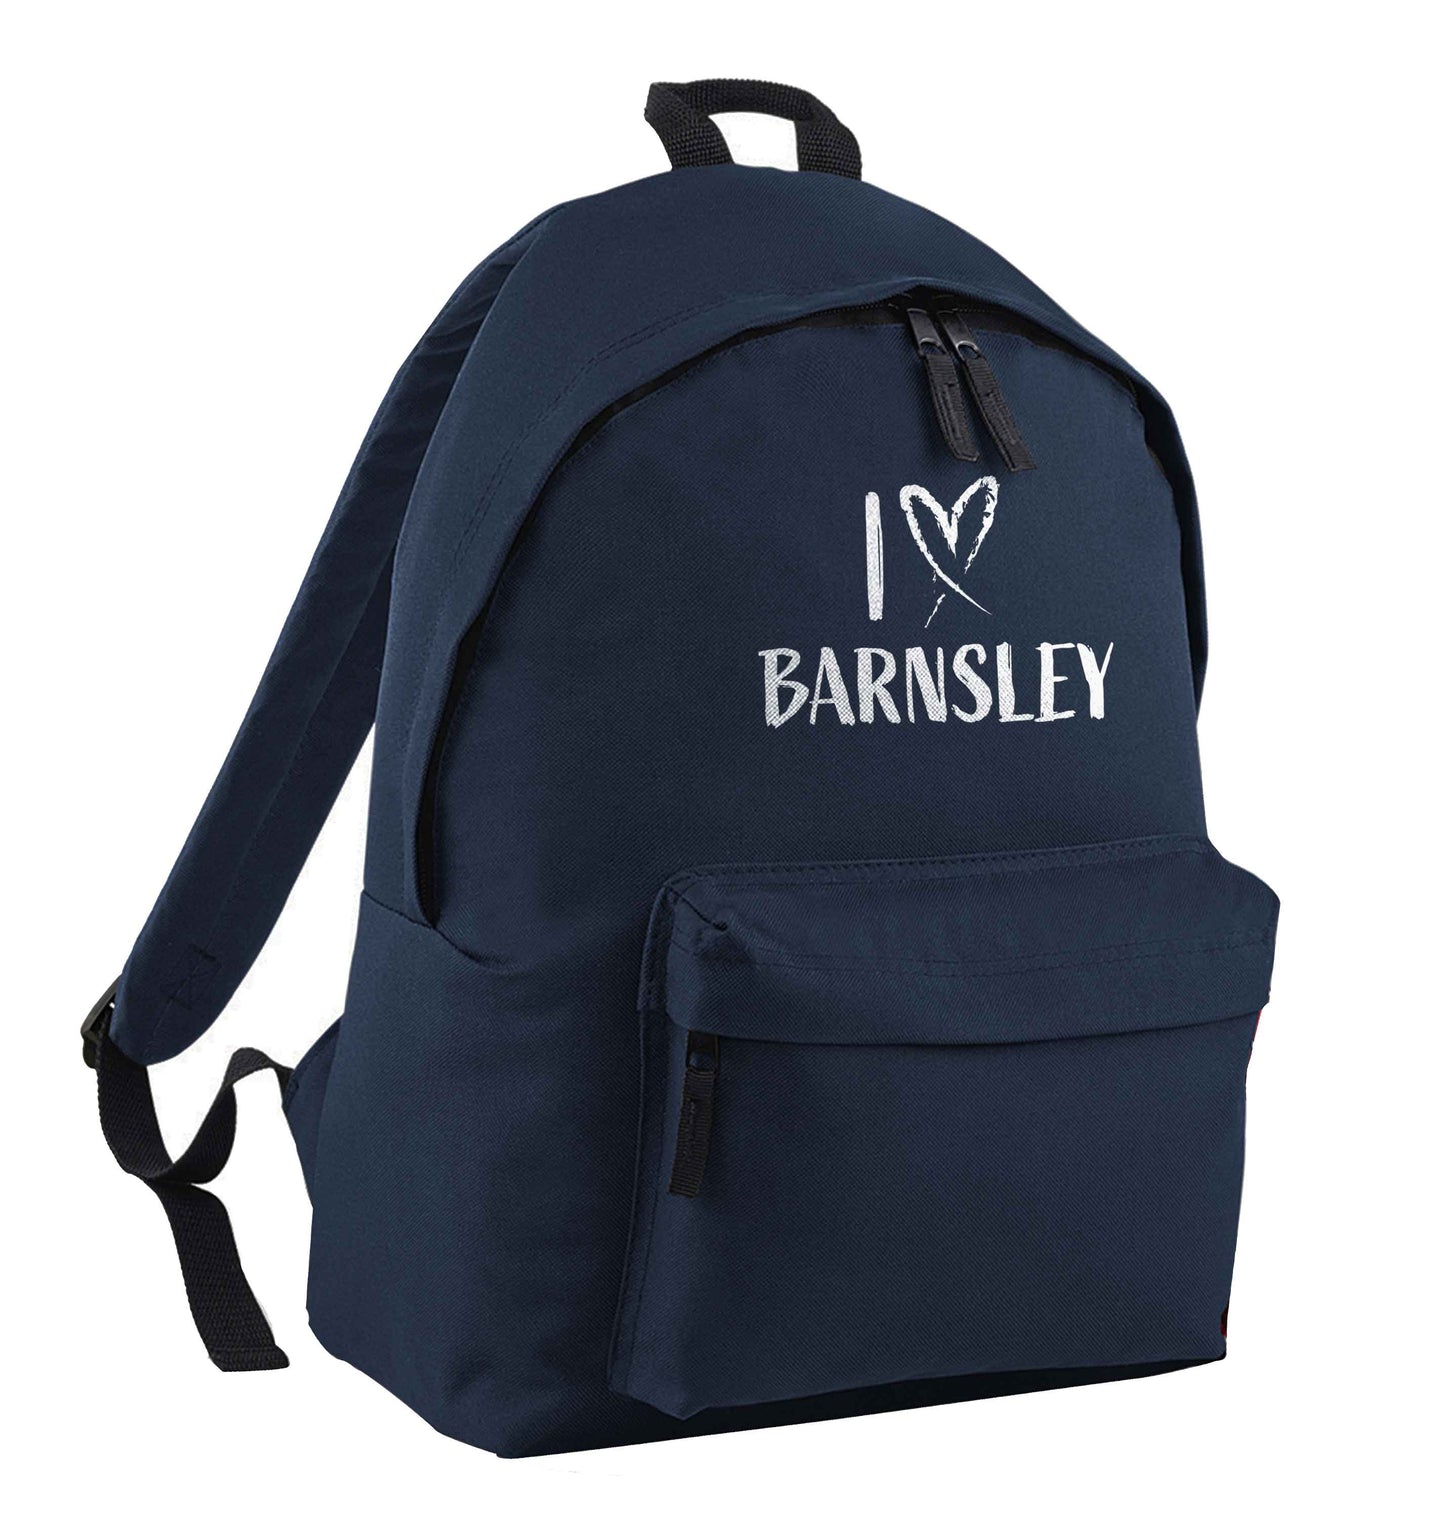 I love Barnsley navy adults backpack